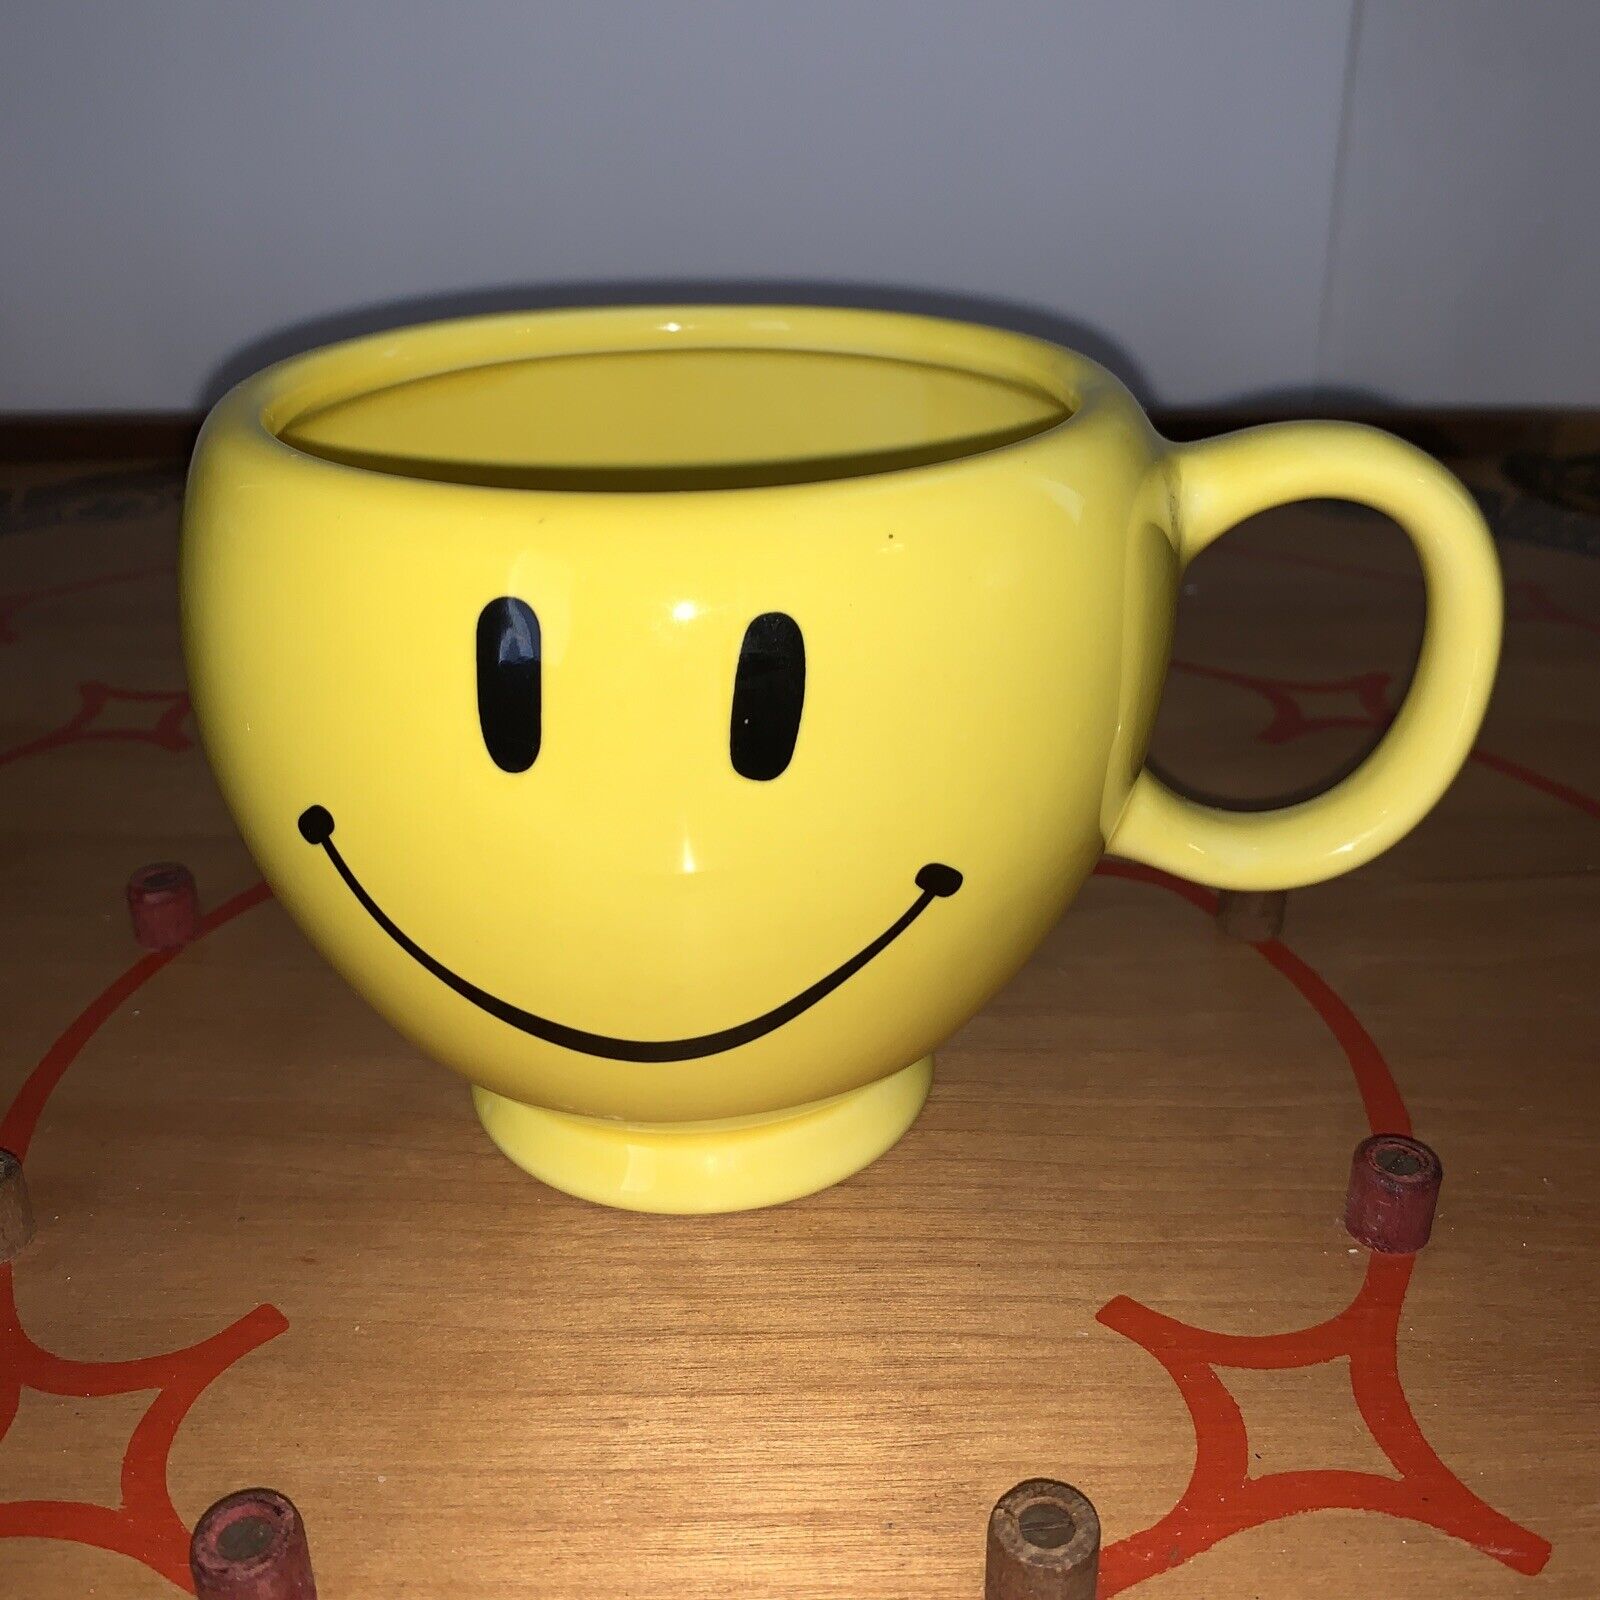 Smiley Face Happy Emoji Coffee Cup Yellow Ceramic Mug Teleflora Gift 16 oz Large